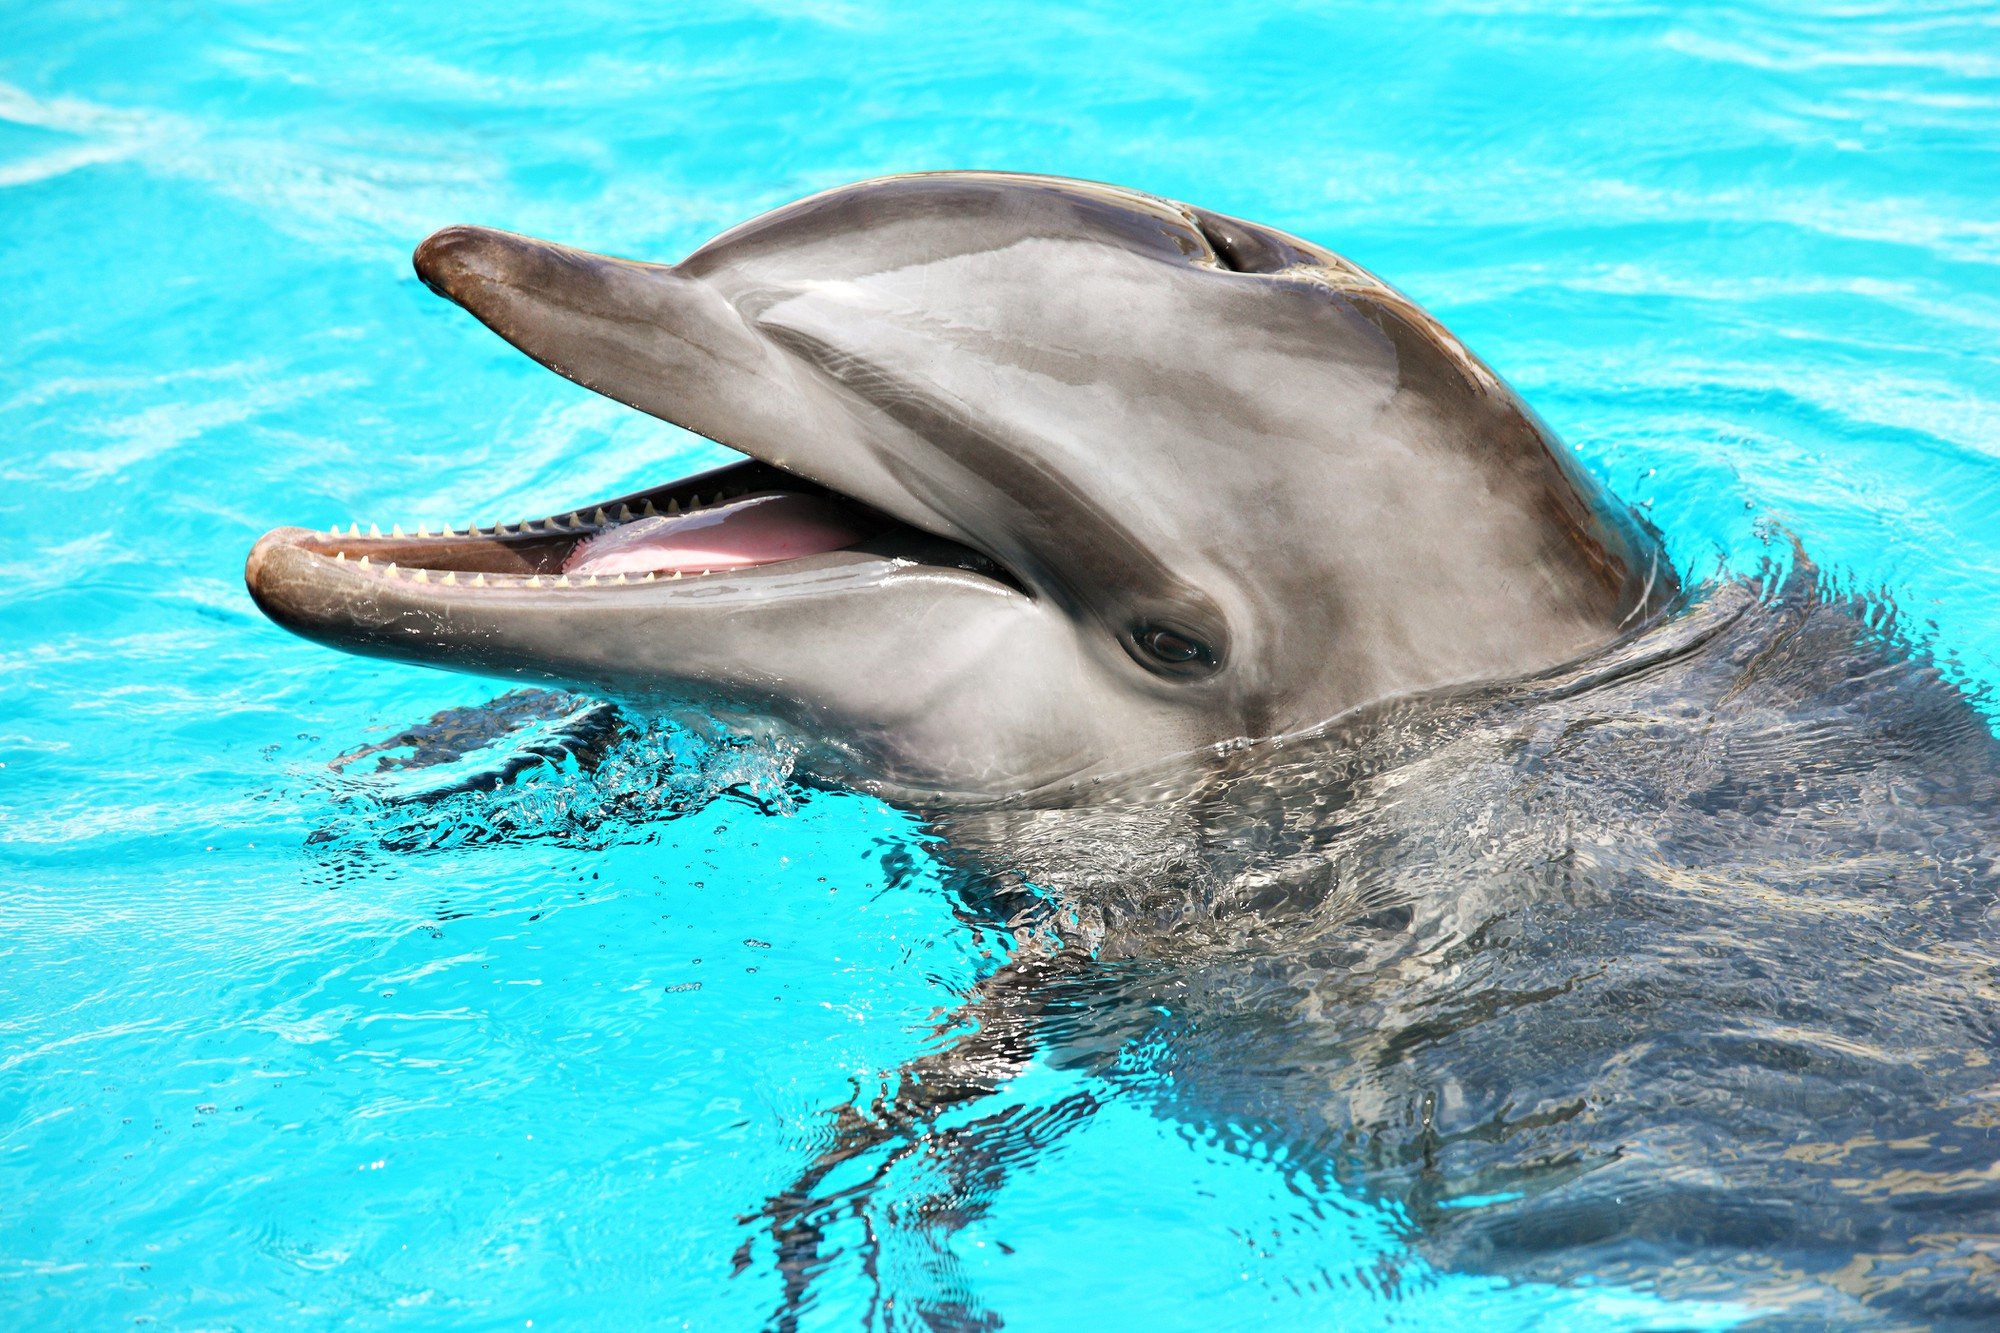 Dolphin - Original image